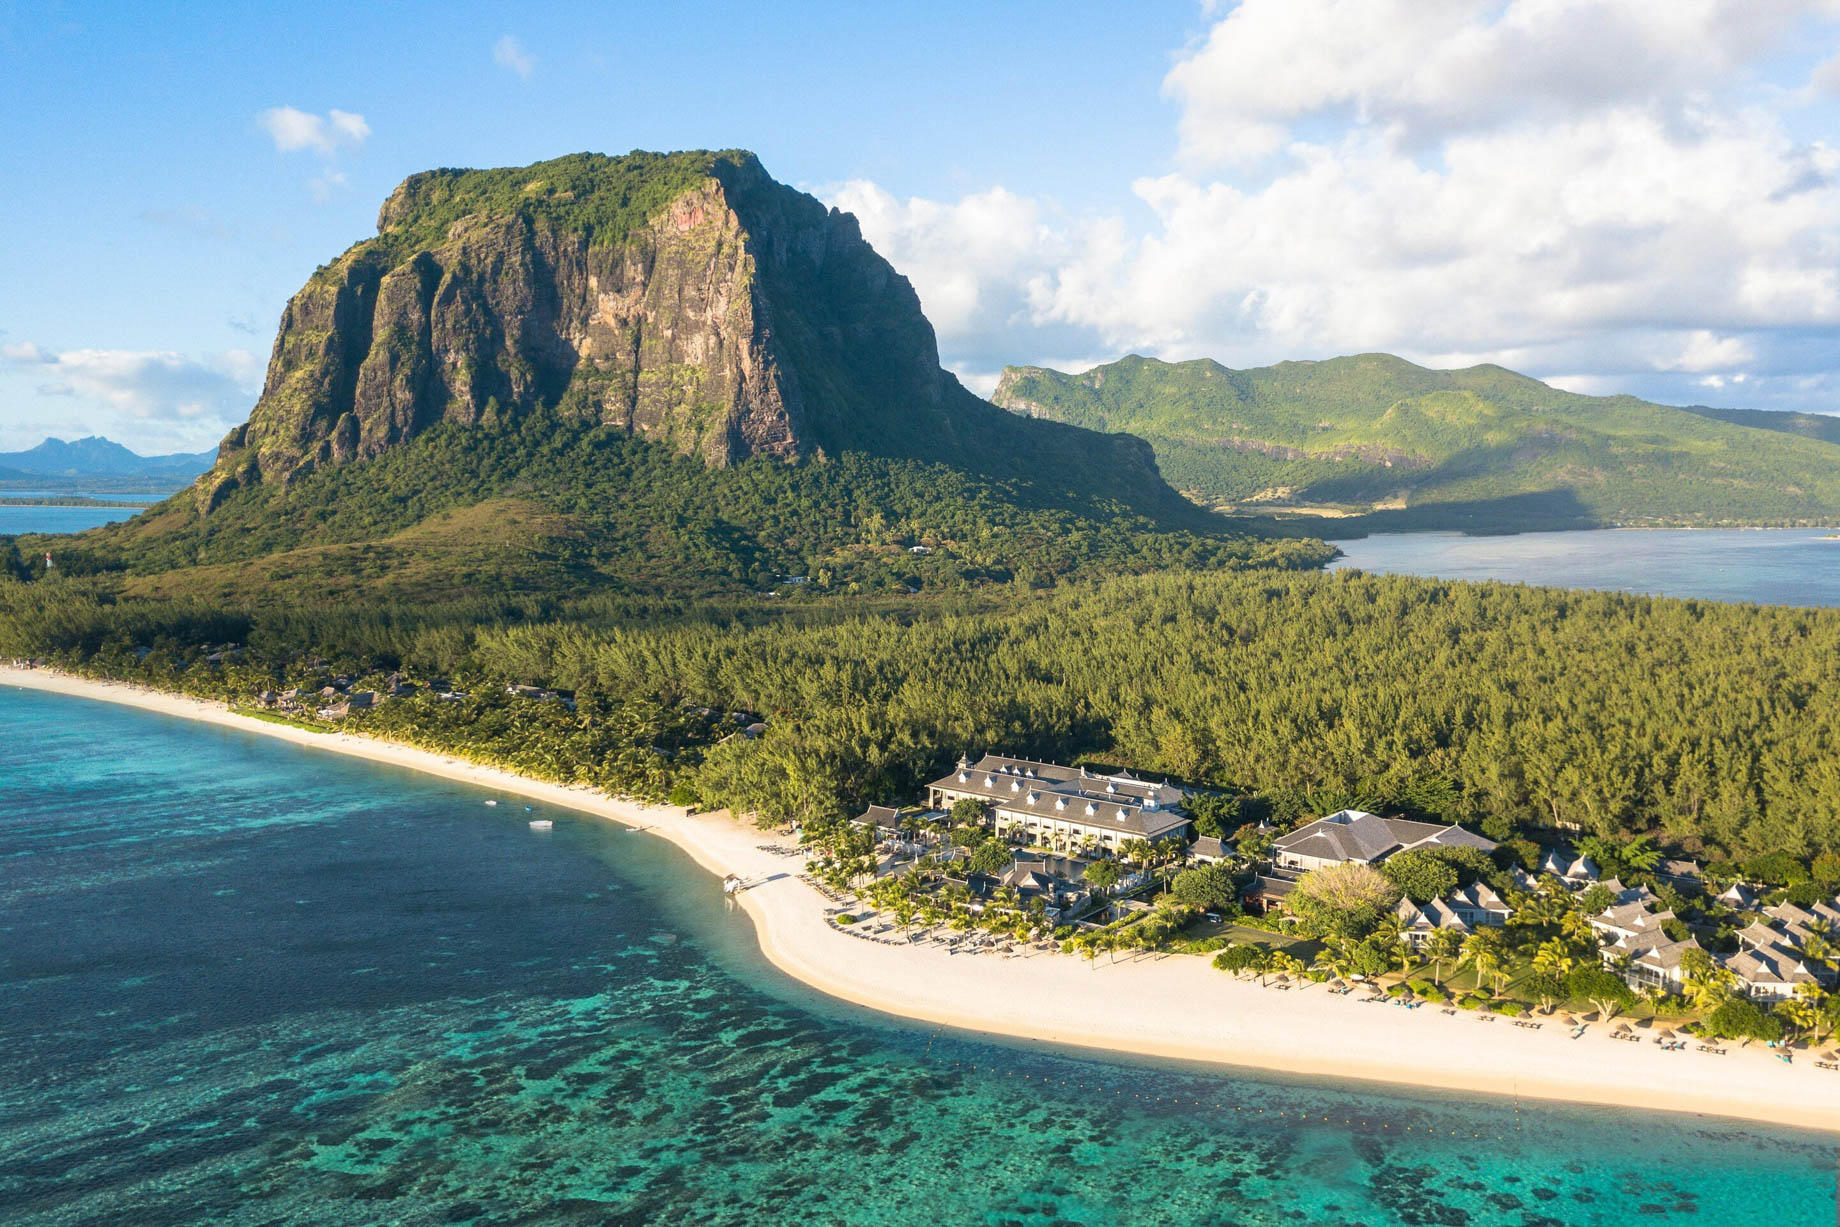 JW Marriott Mauritius Resort - Mauritius - Resort Aerial View